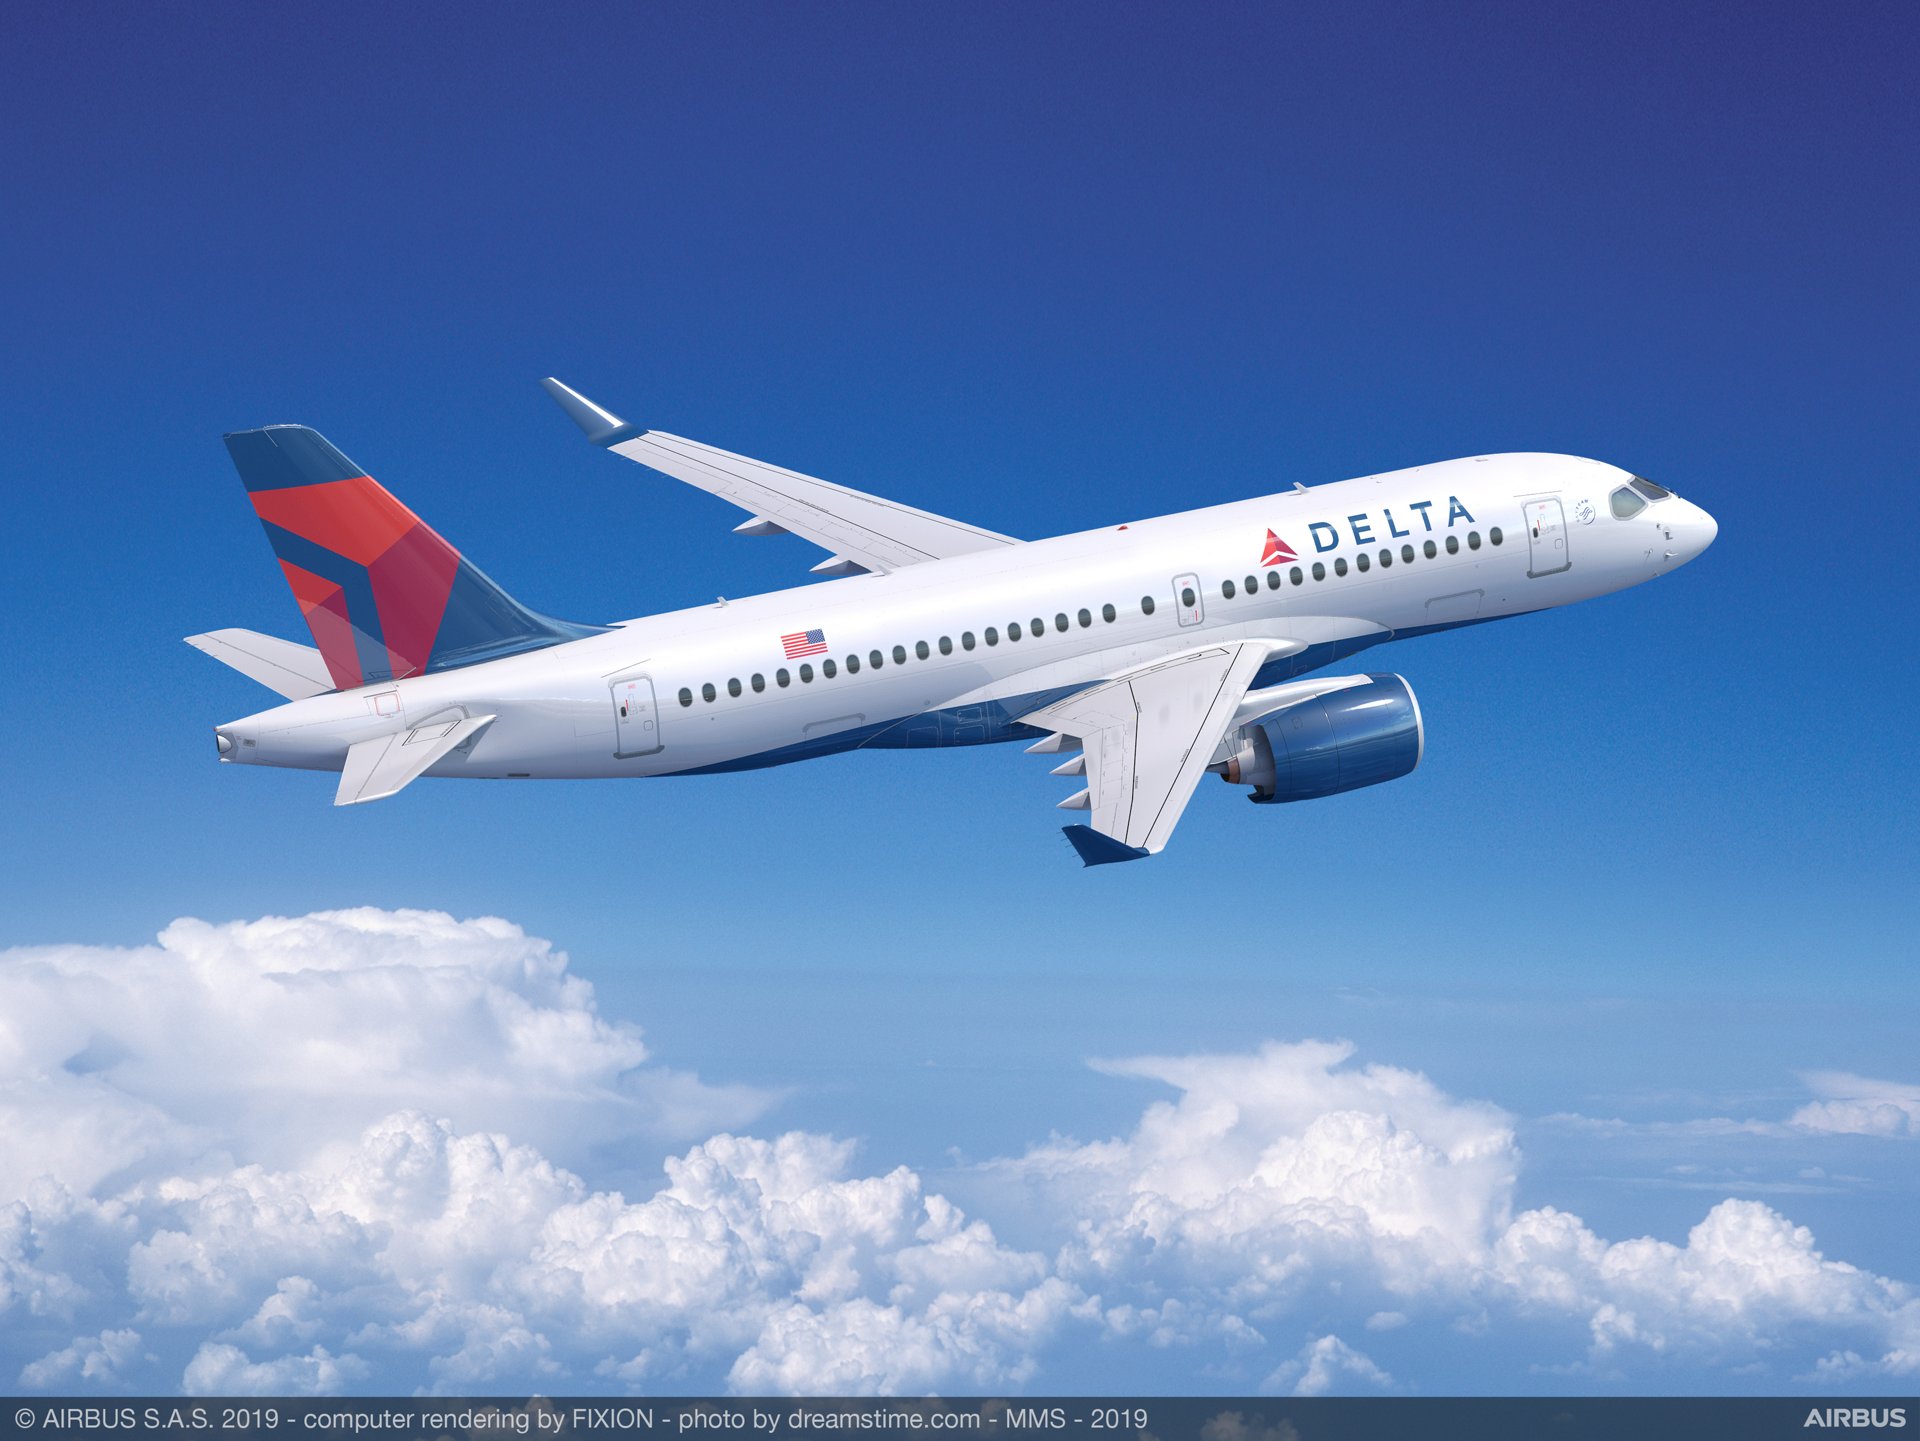 Delta Airlines – Εκτίμηση για αυξημένες επιδόσεις το δ’ τρίμηνο